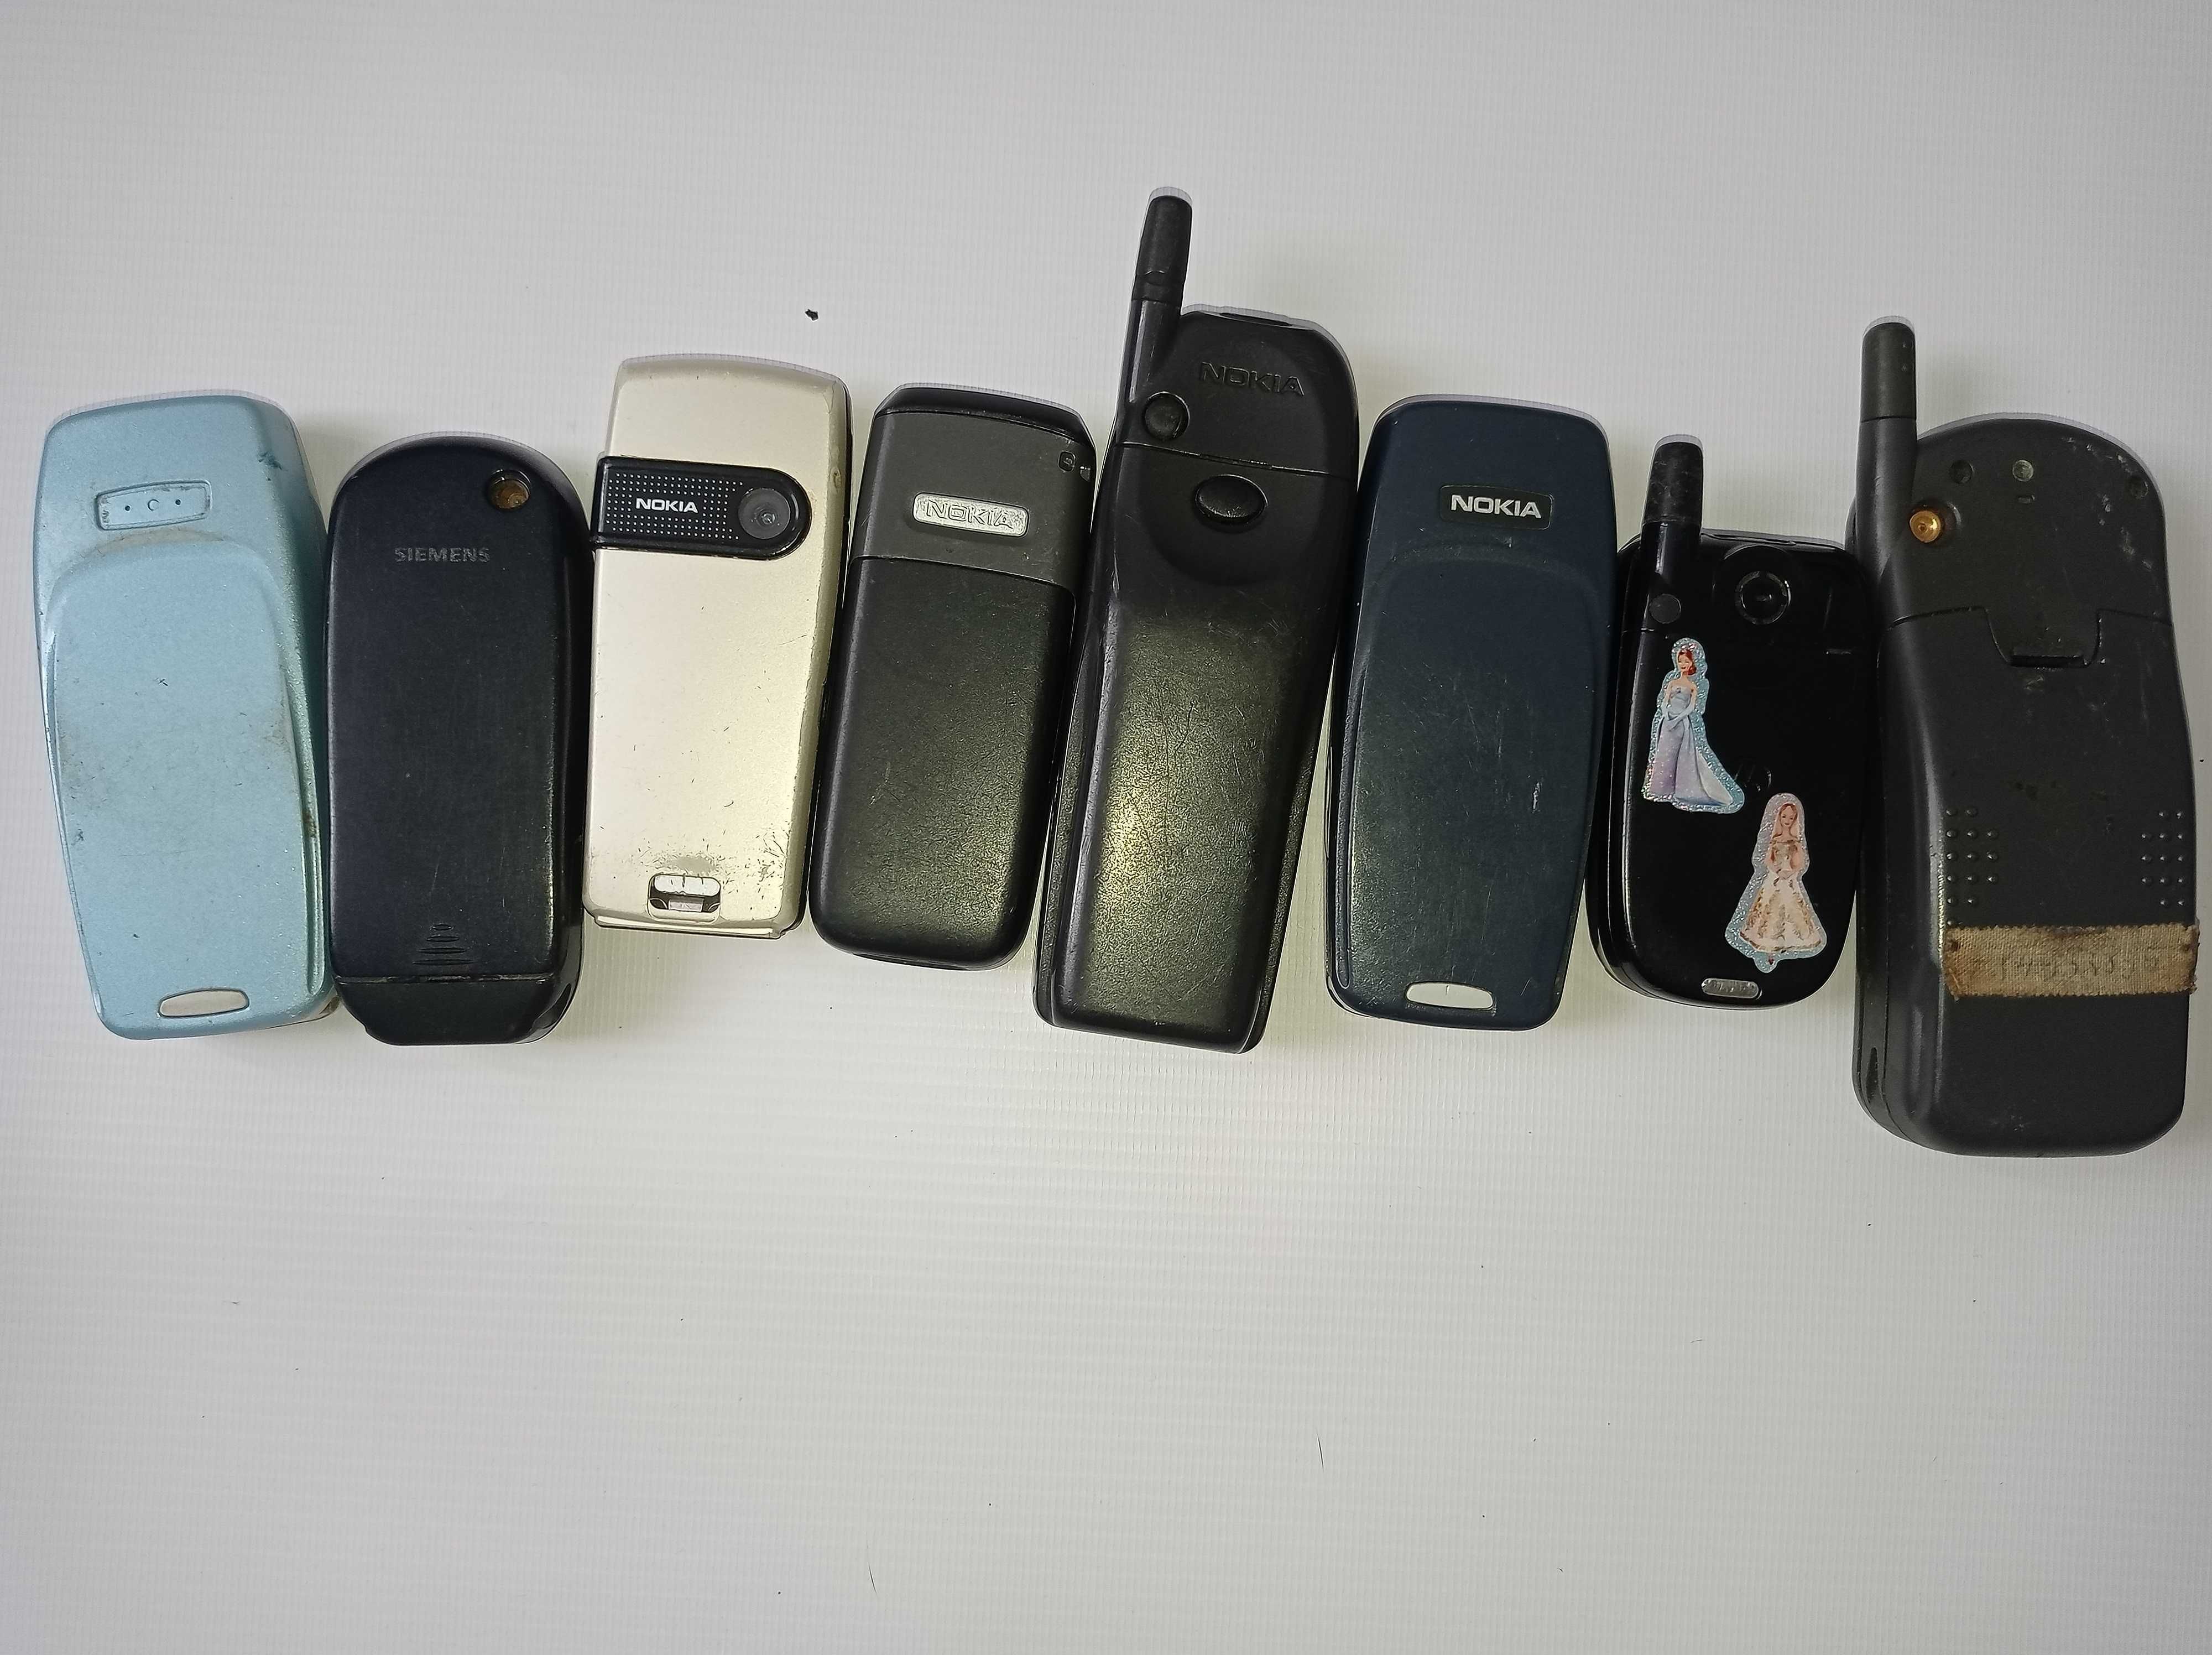 Stare telefony komórkowe - Nokia, Alcatel, Siemens, Motorola -9 sztuk.